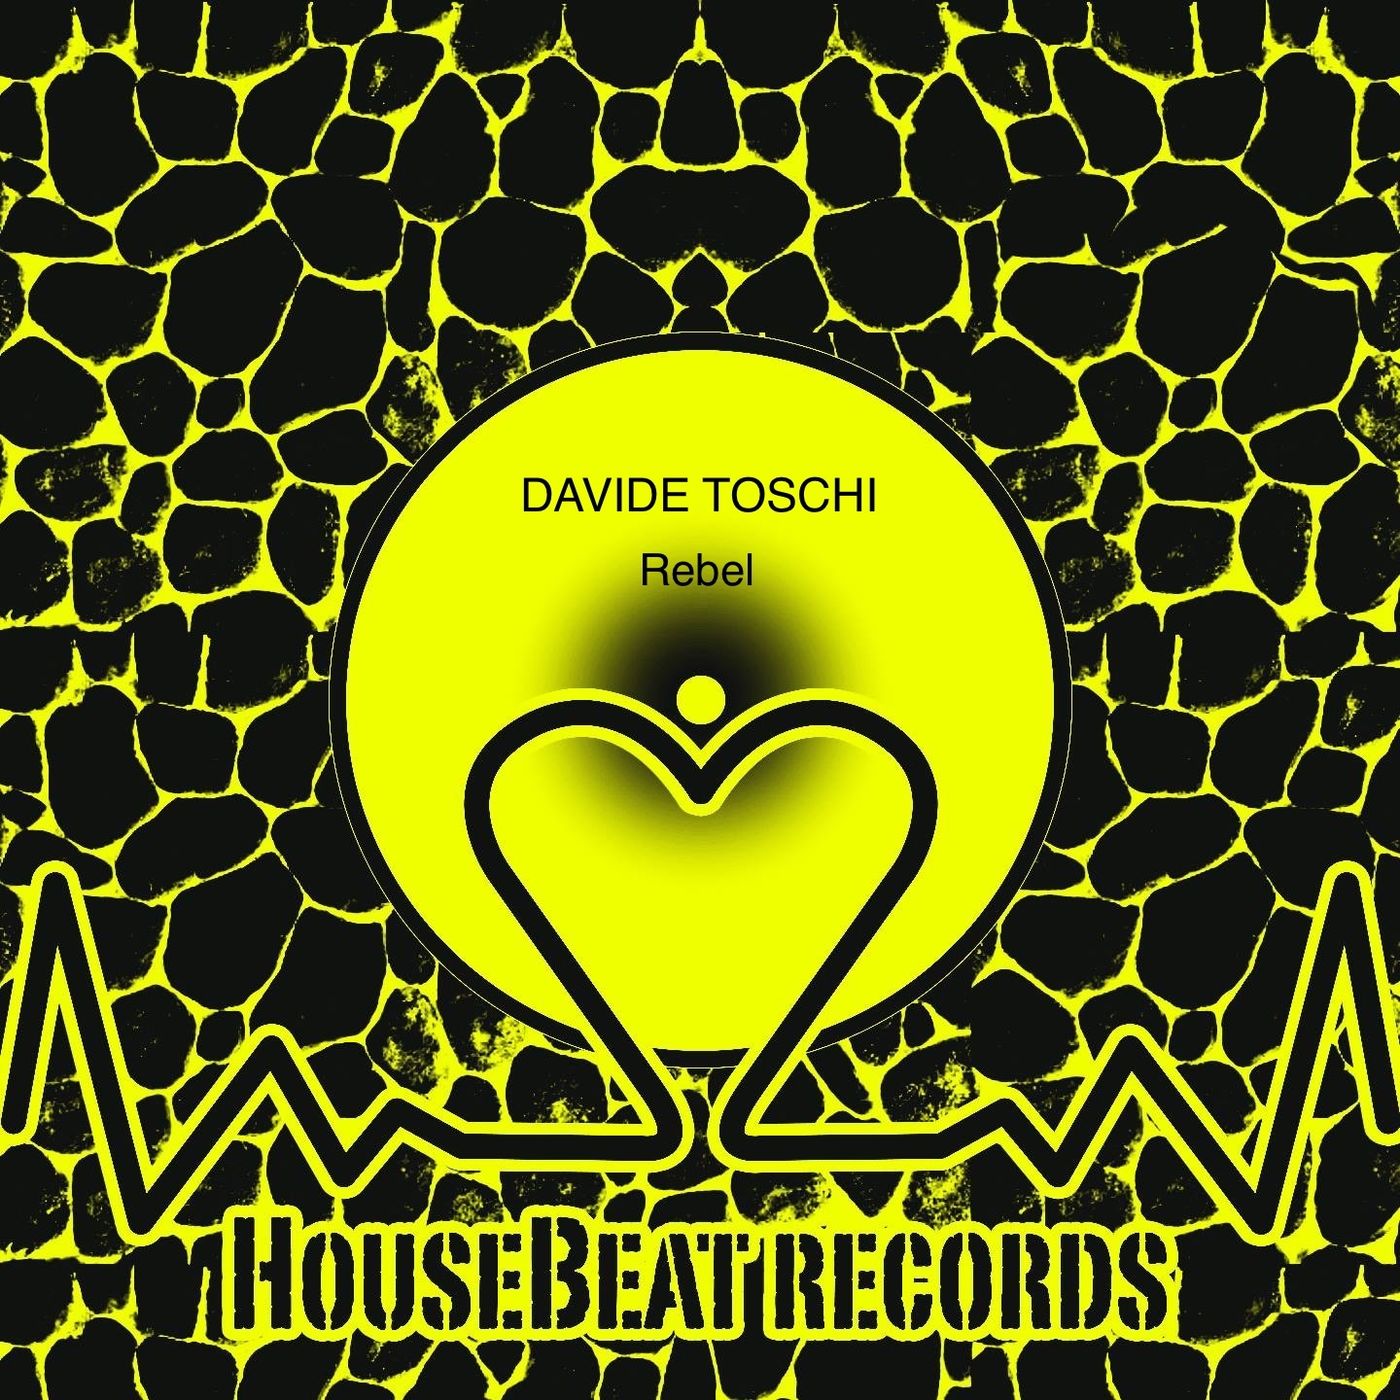 Davide Toschi - Rebel / HouseBeat Records